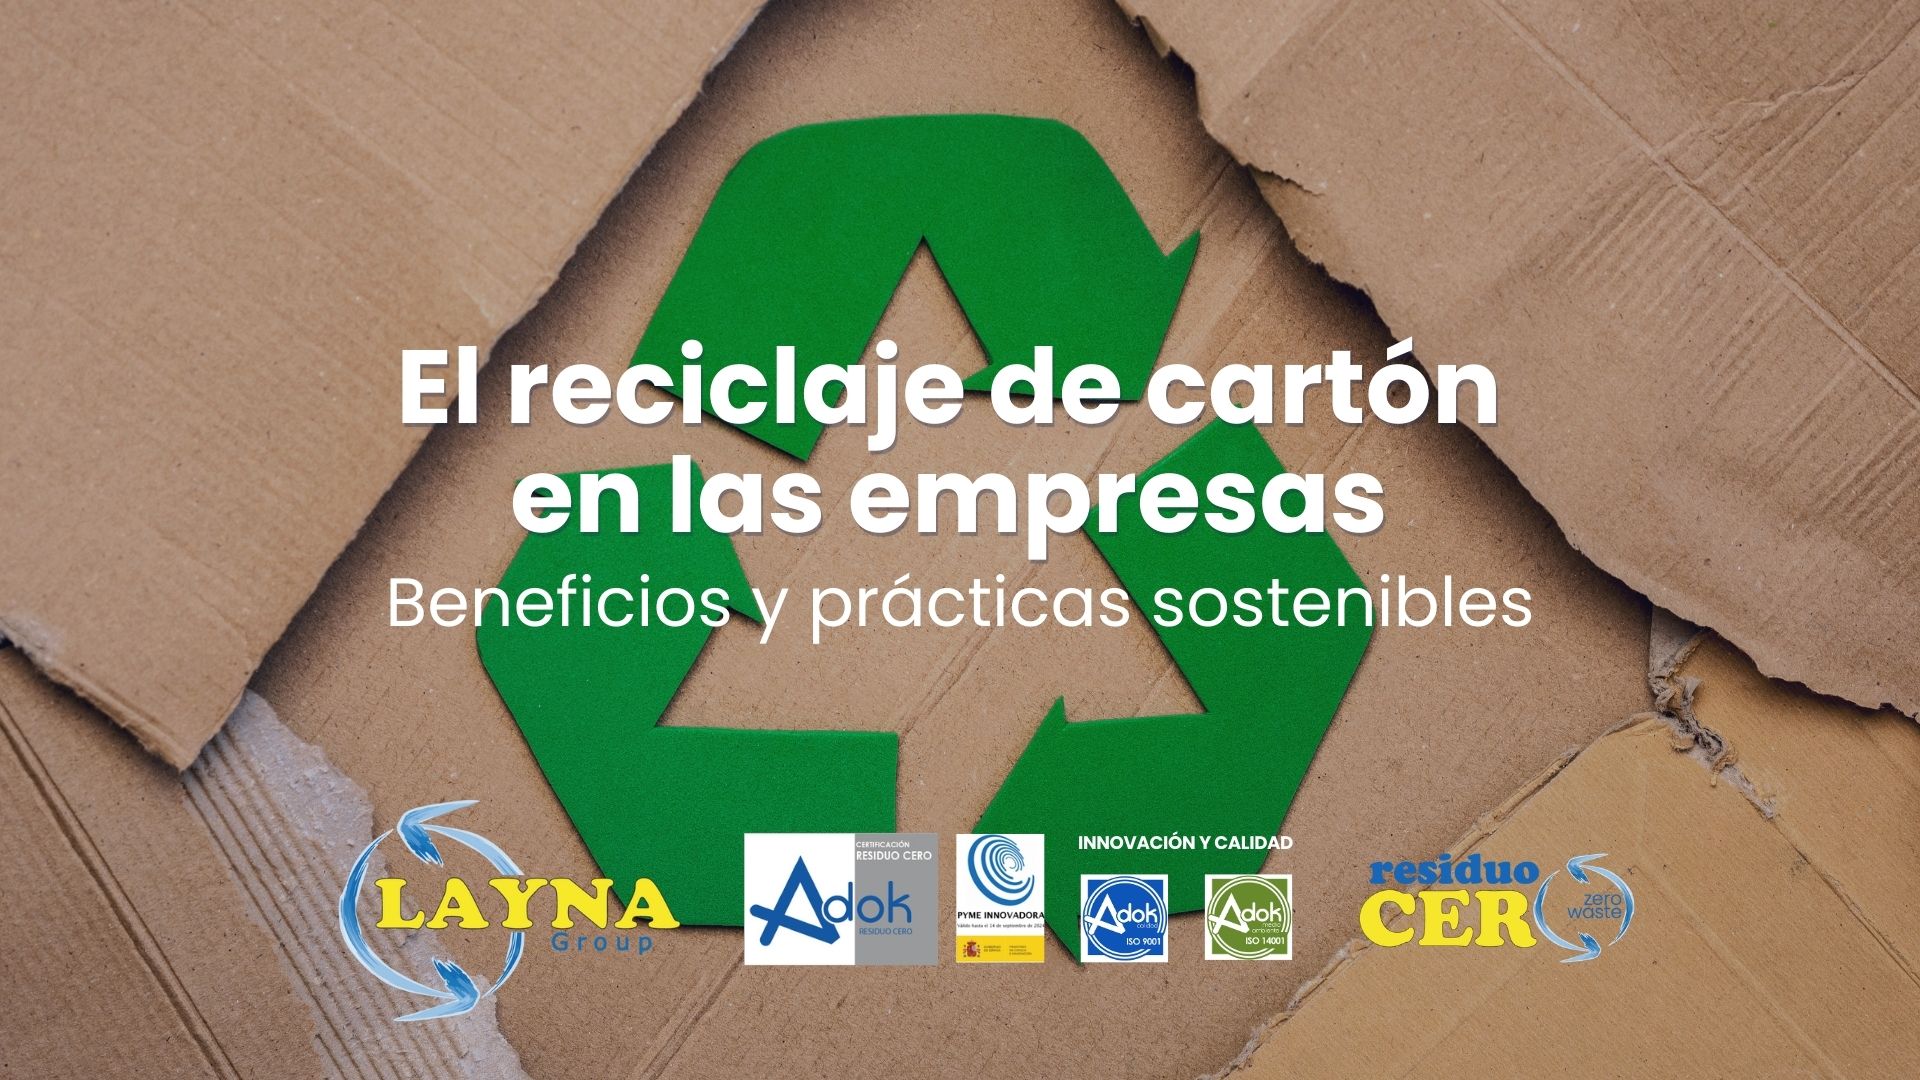 Grupo Layna reciclaje de carton